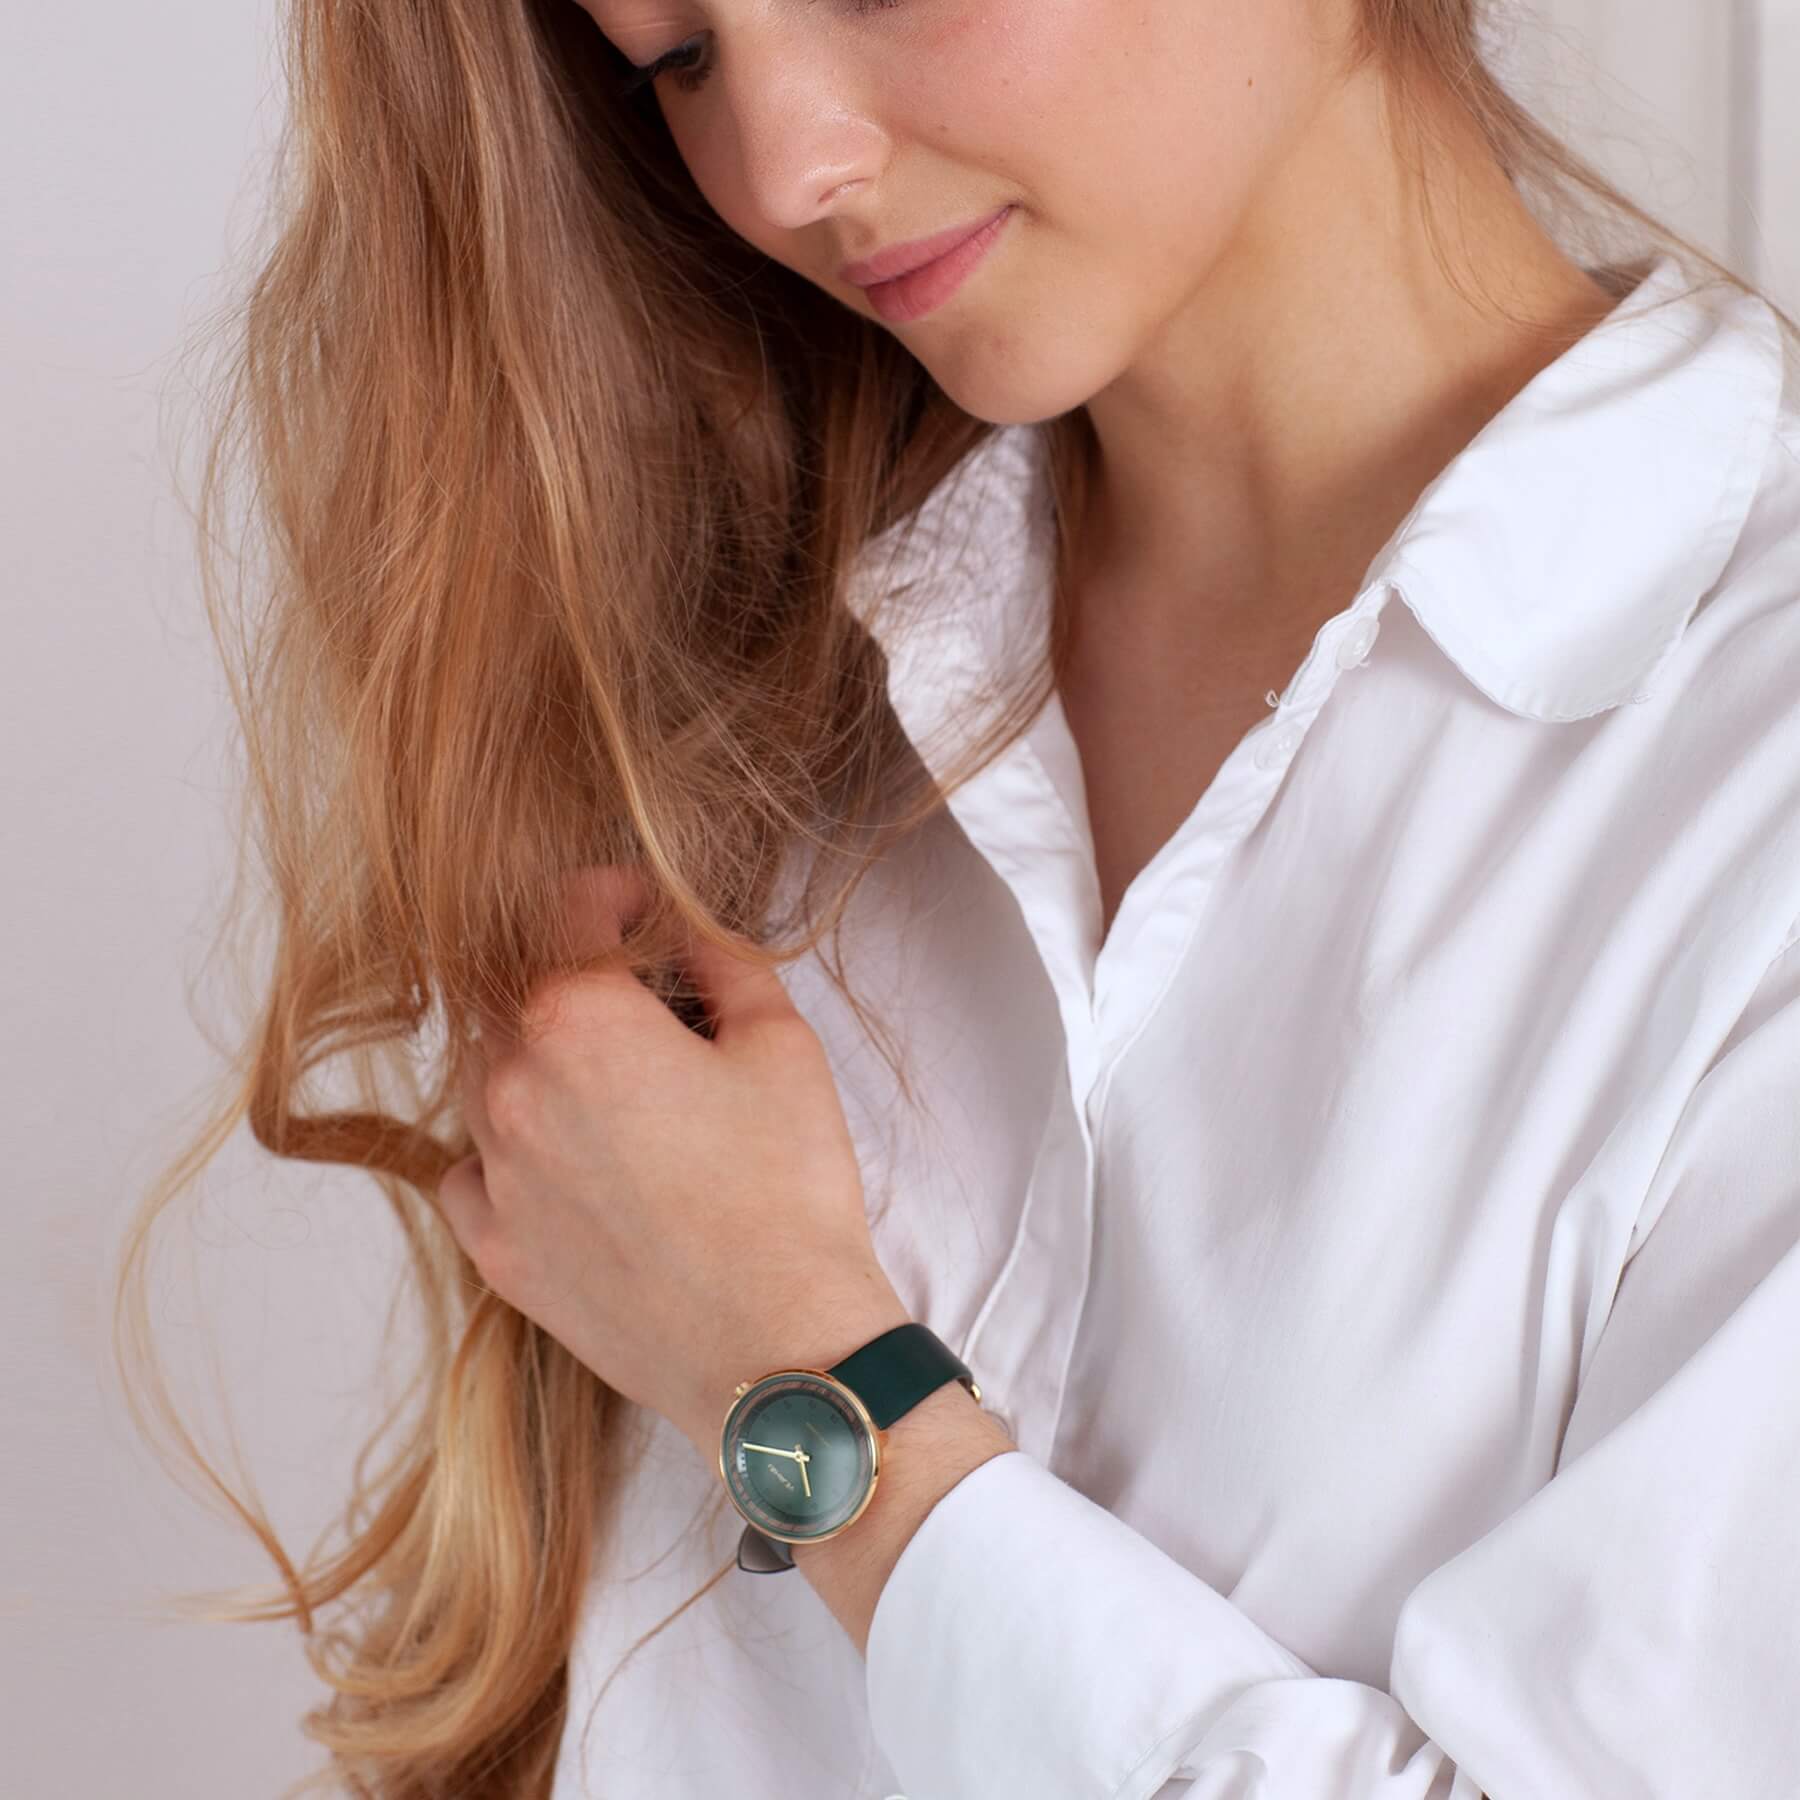 women long hair and a white shirt wearing a green and golden watch